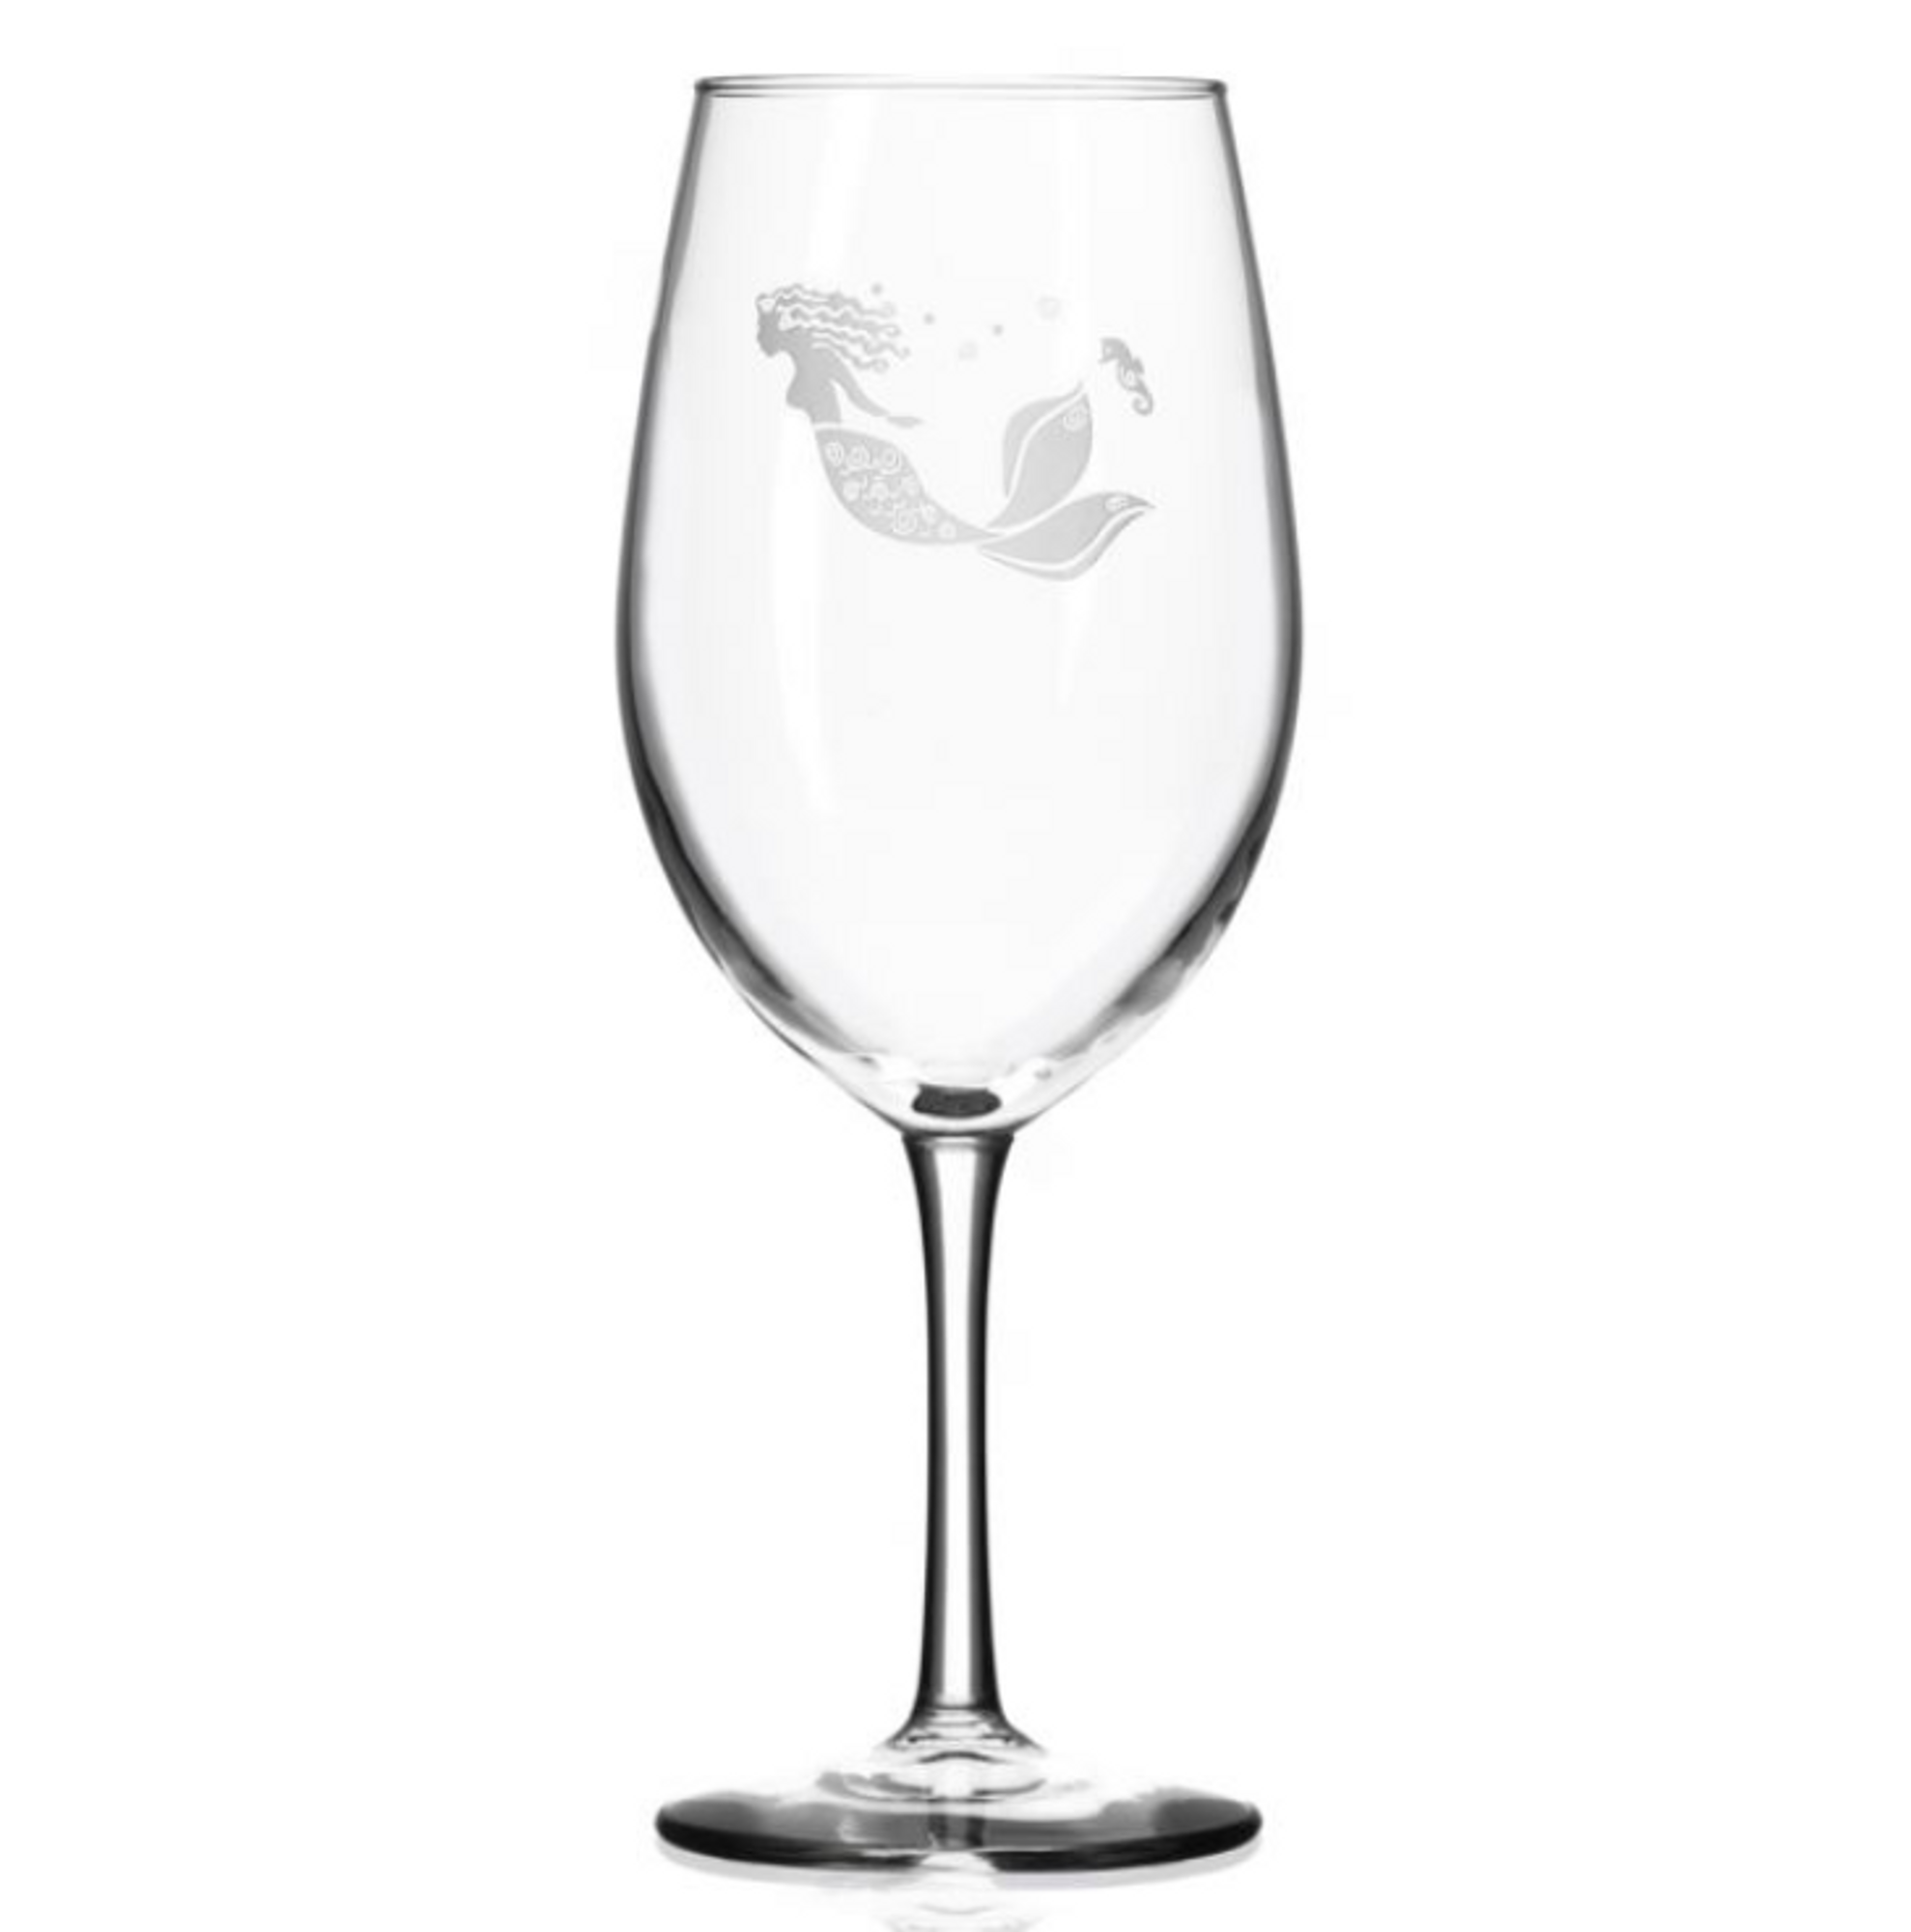 Rolf Glass - Shop Glassware - Wine Glasses - Barware - Tableware